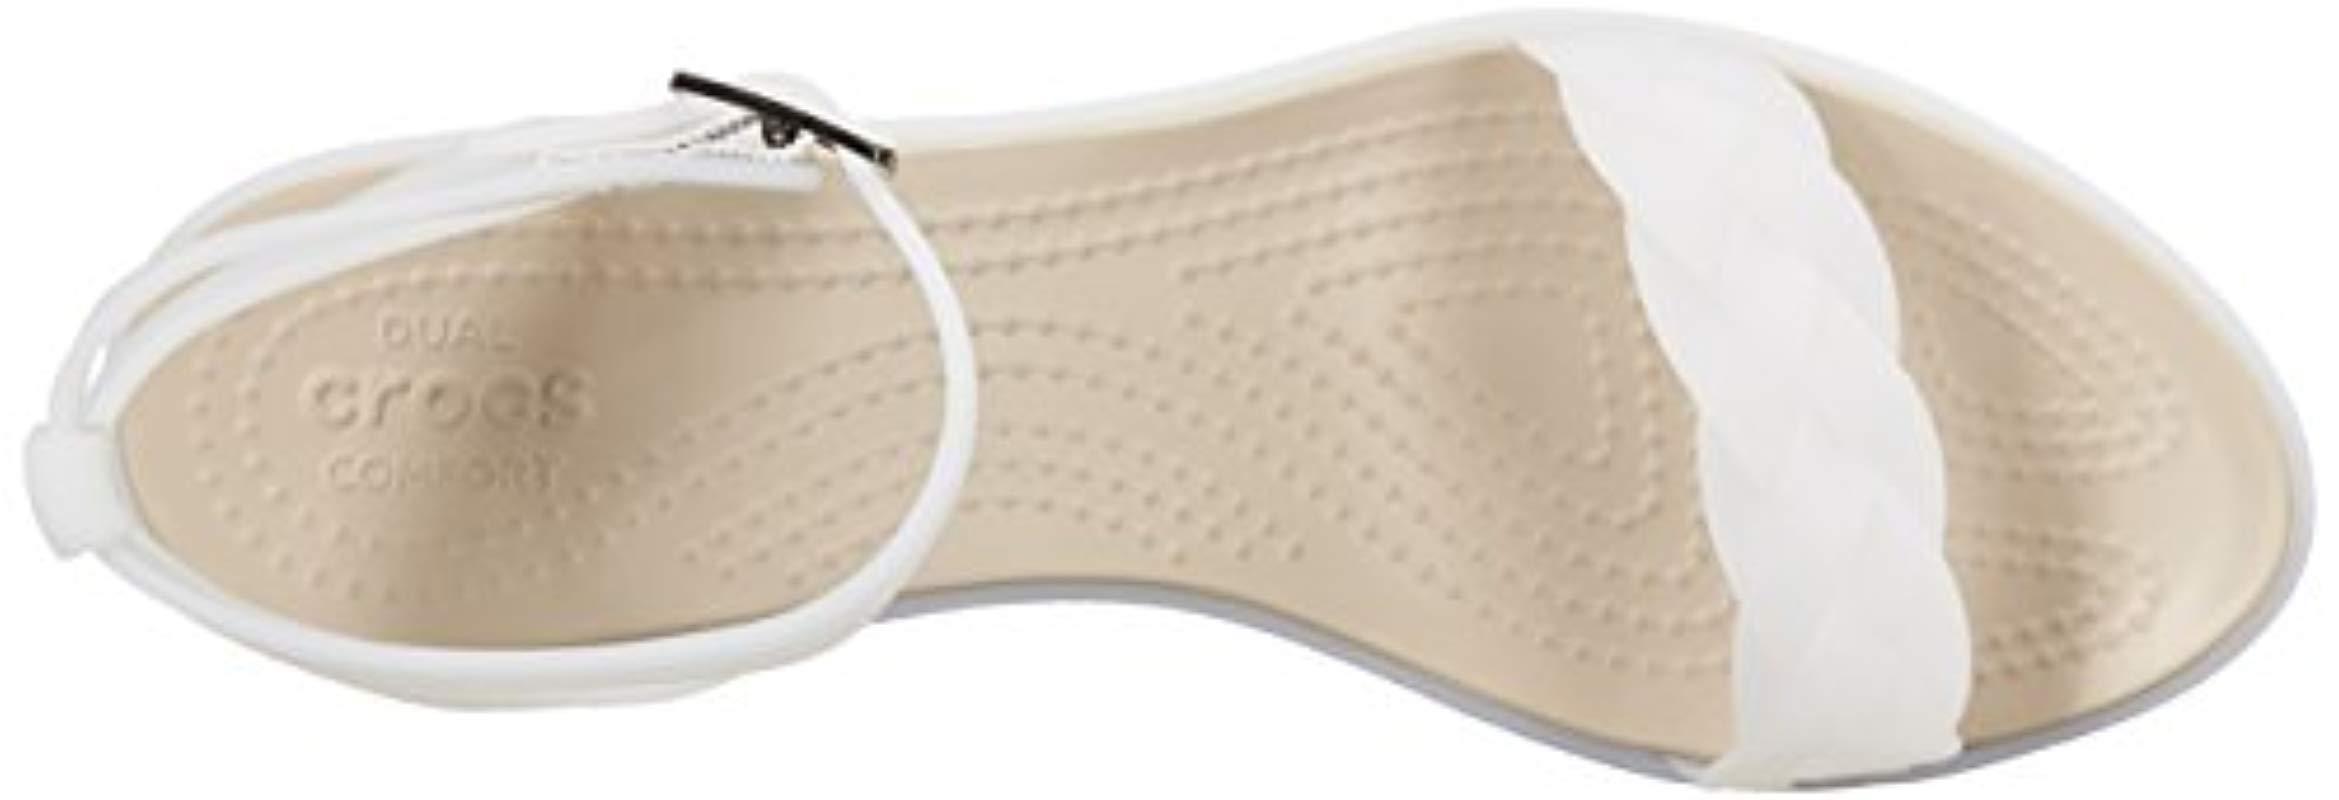 crocs isabella block heel